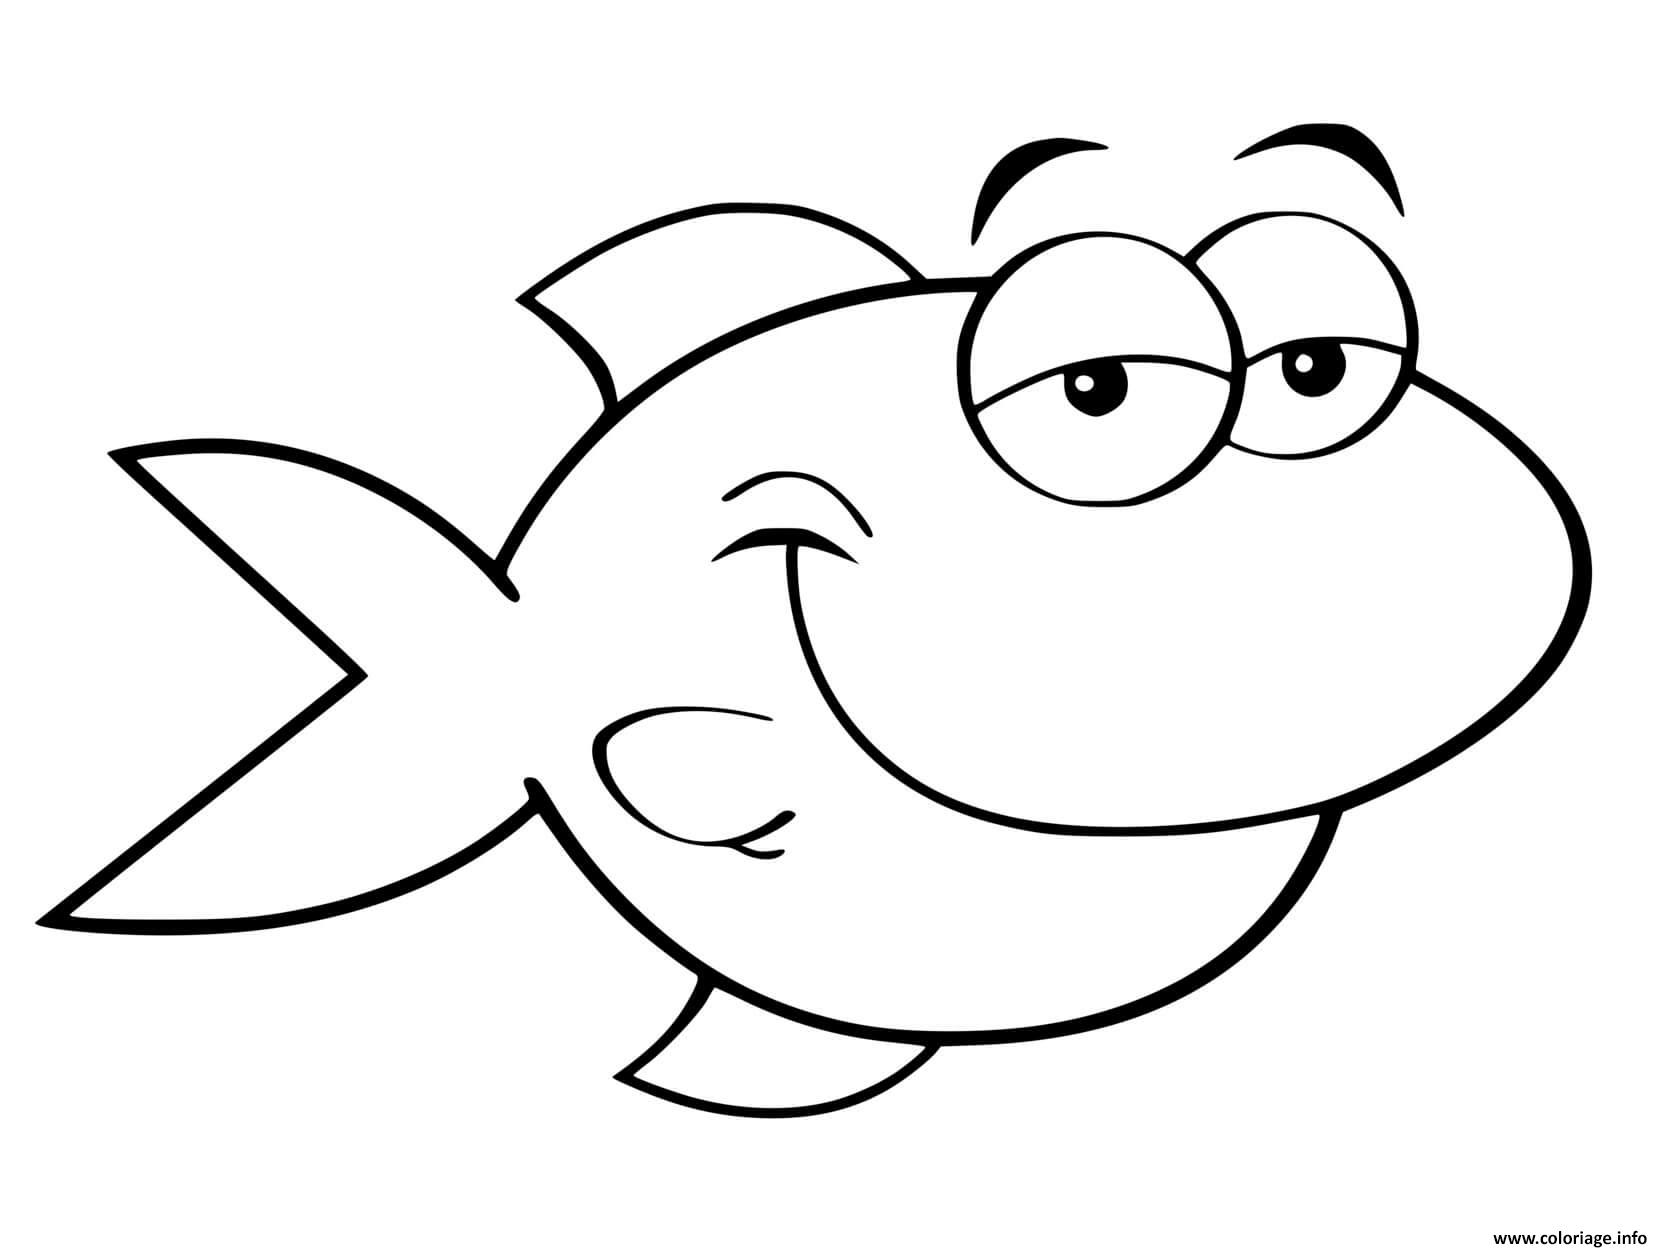 Comment dessiner un poisson - Blog - Dessindigo